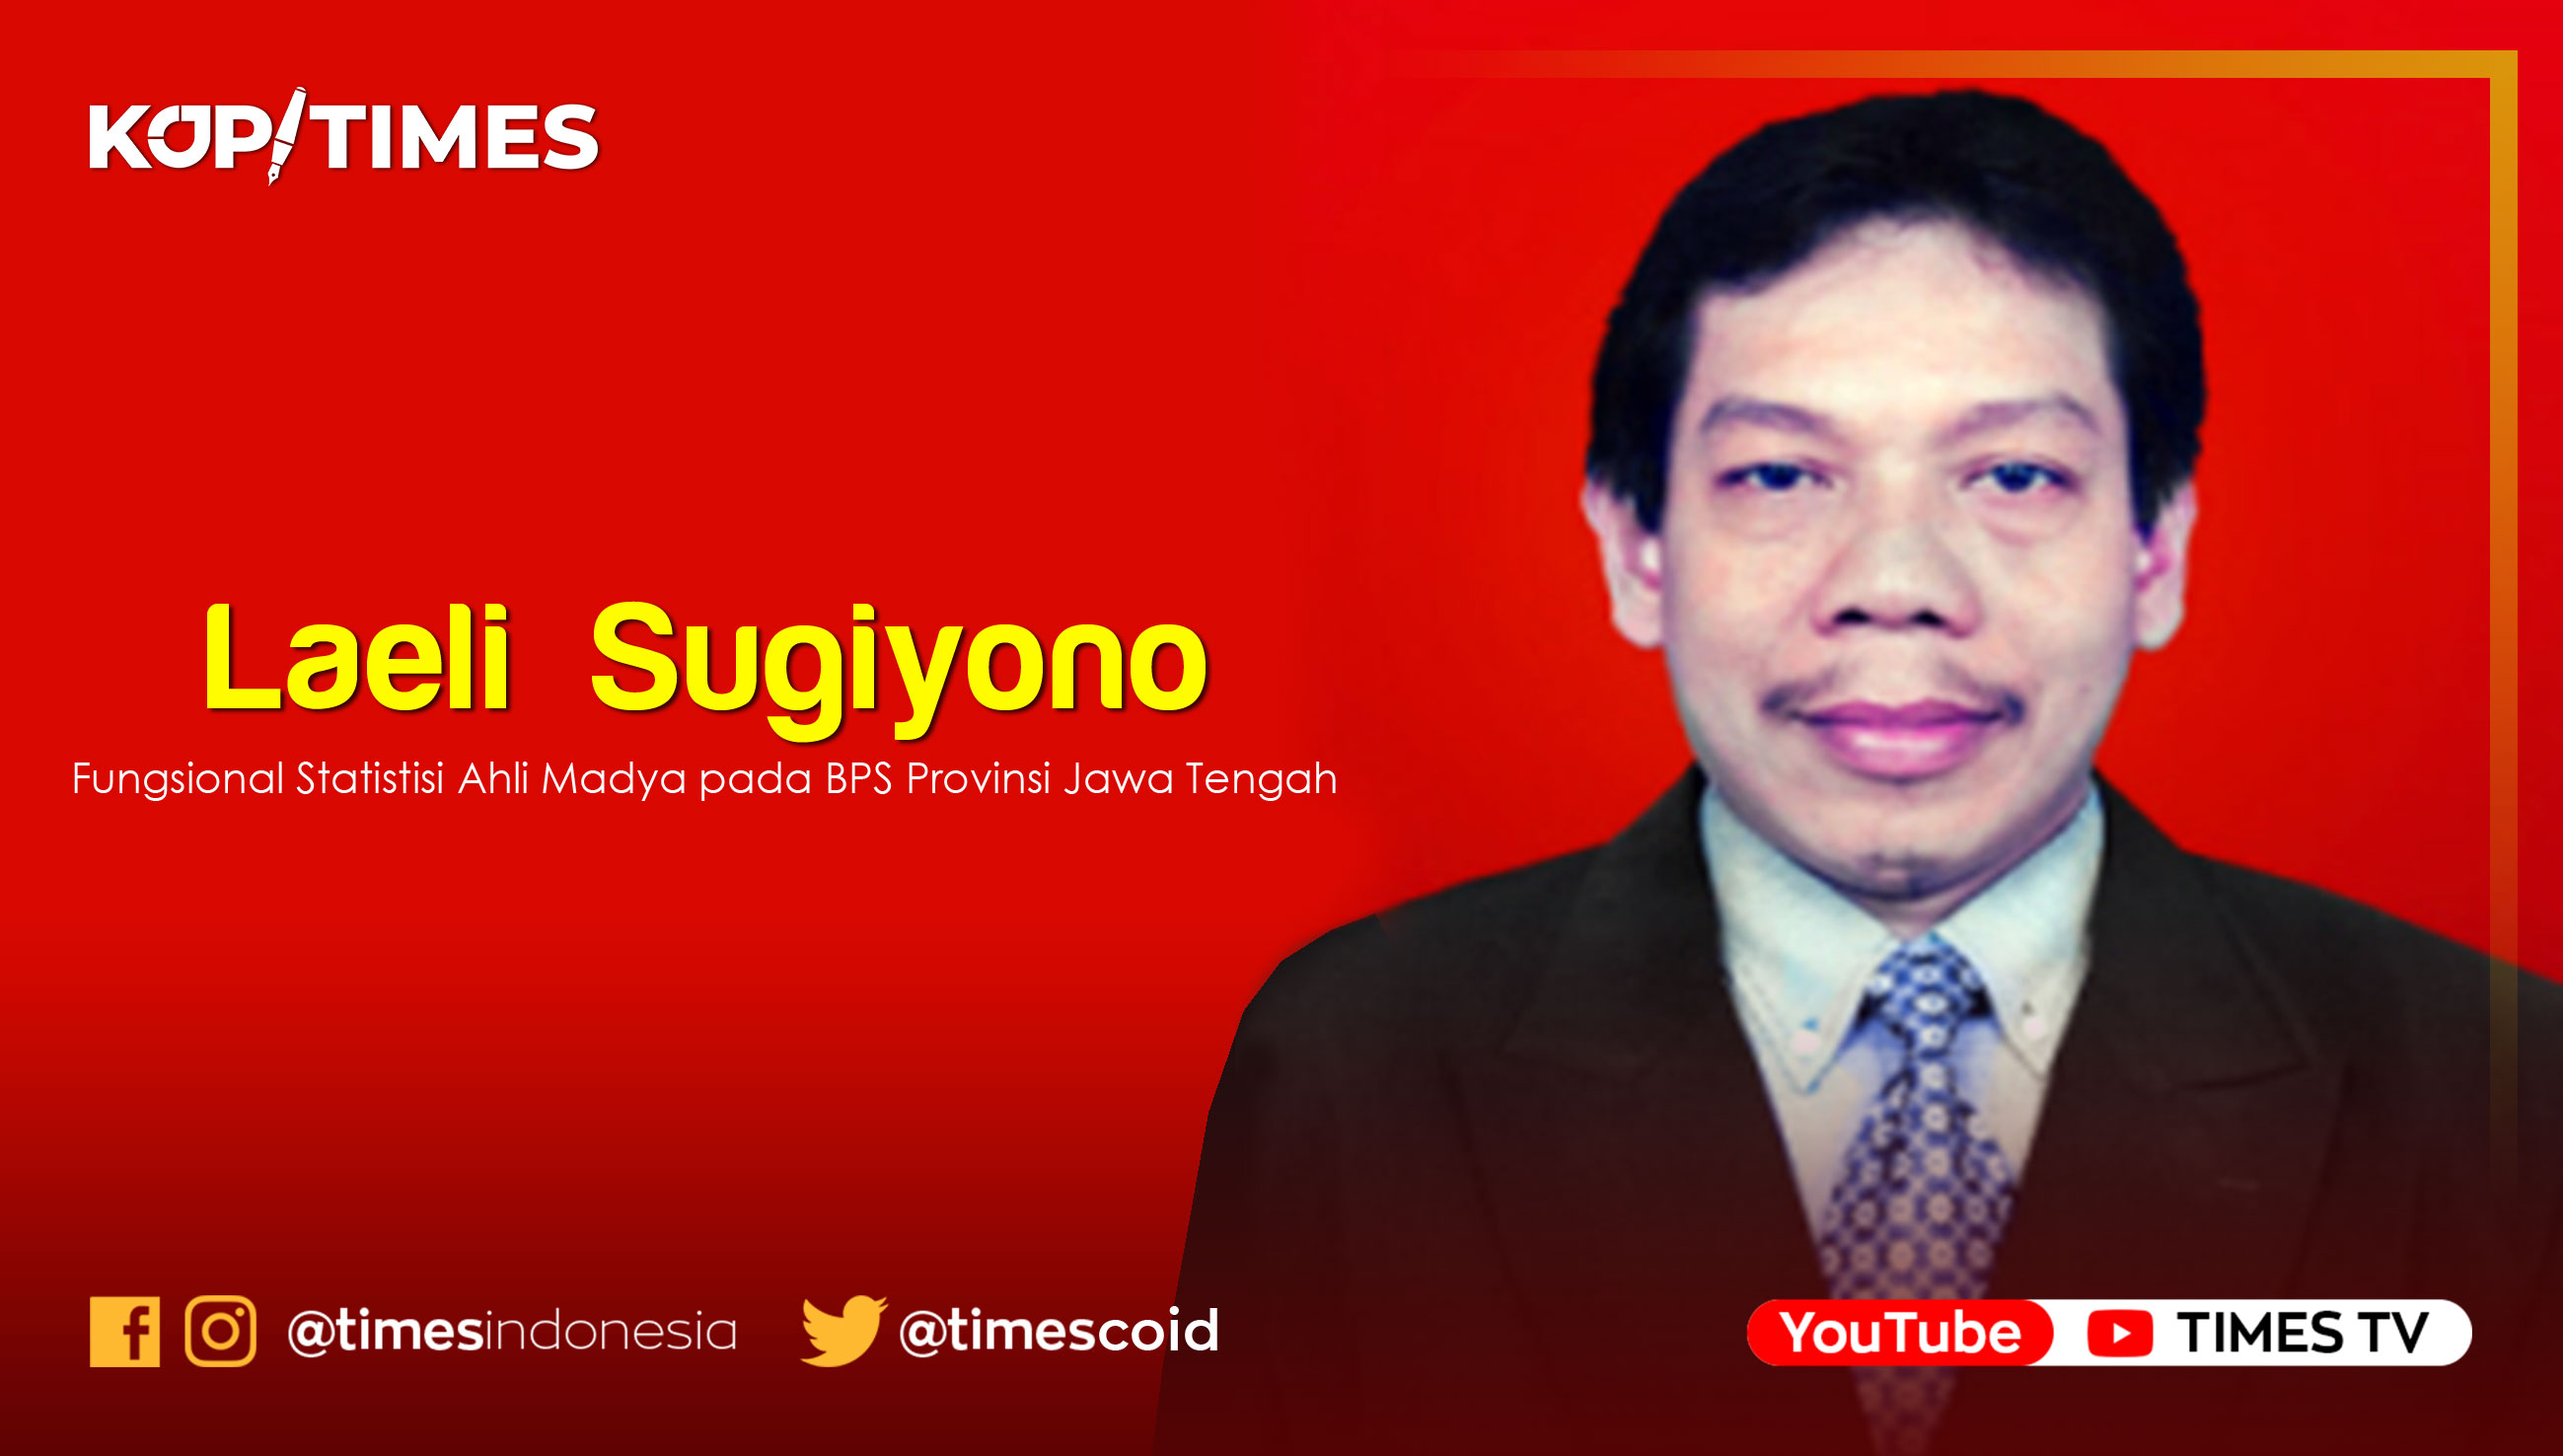 Laeli Sugiyono, M.Si, Statistisi Ahli Madya pada BPS Provinsi Jawa Tengah